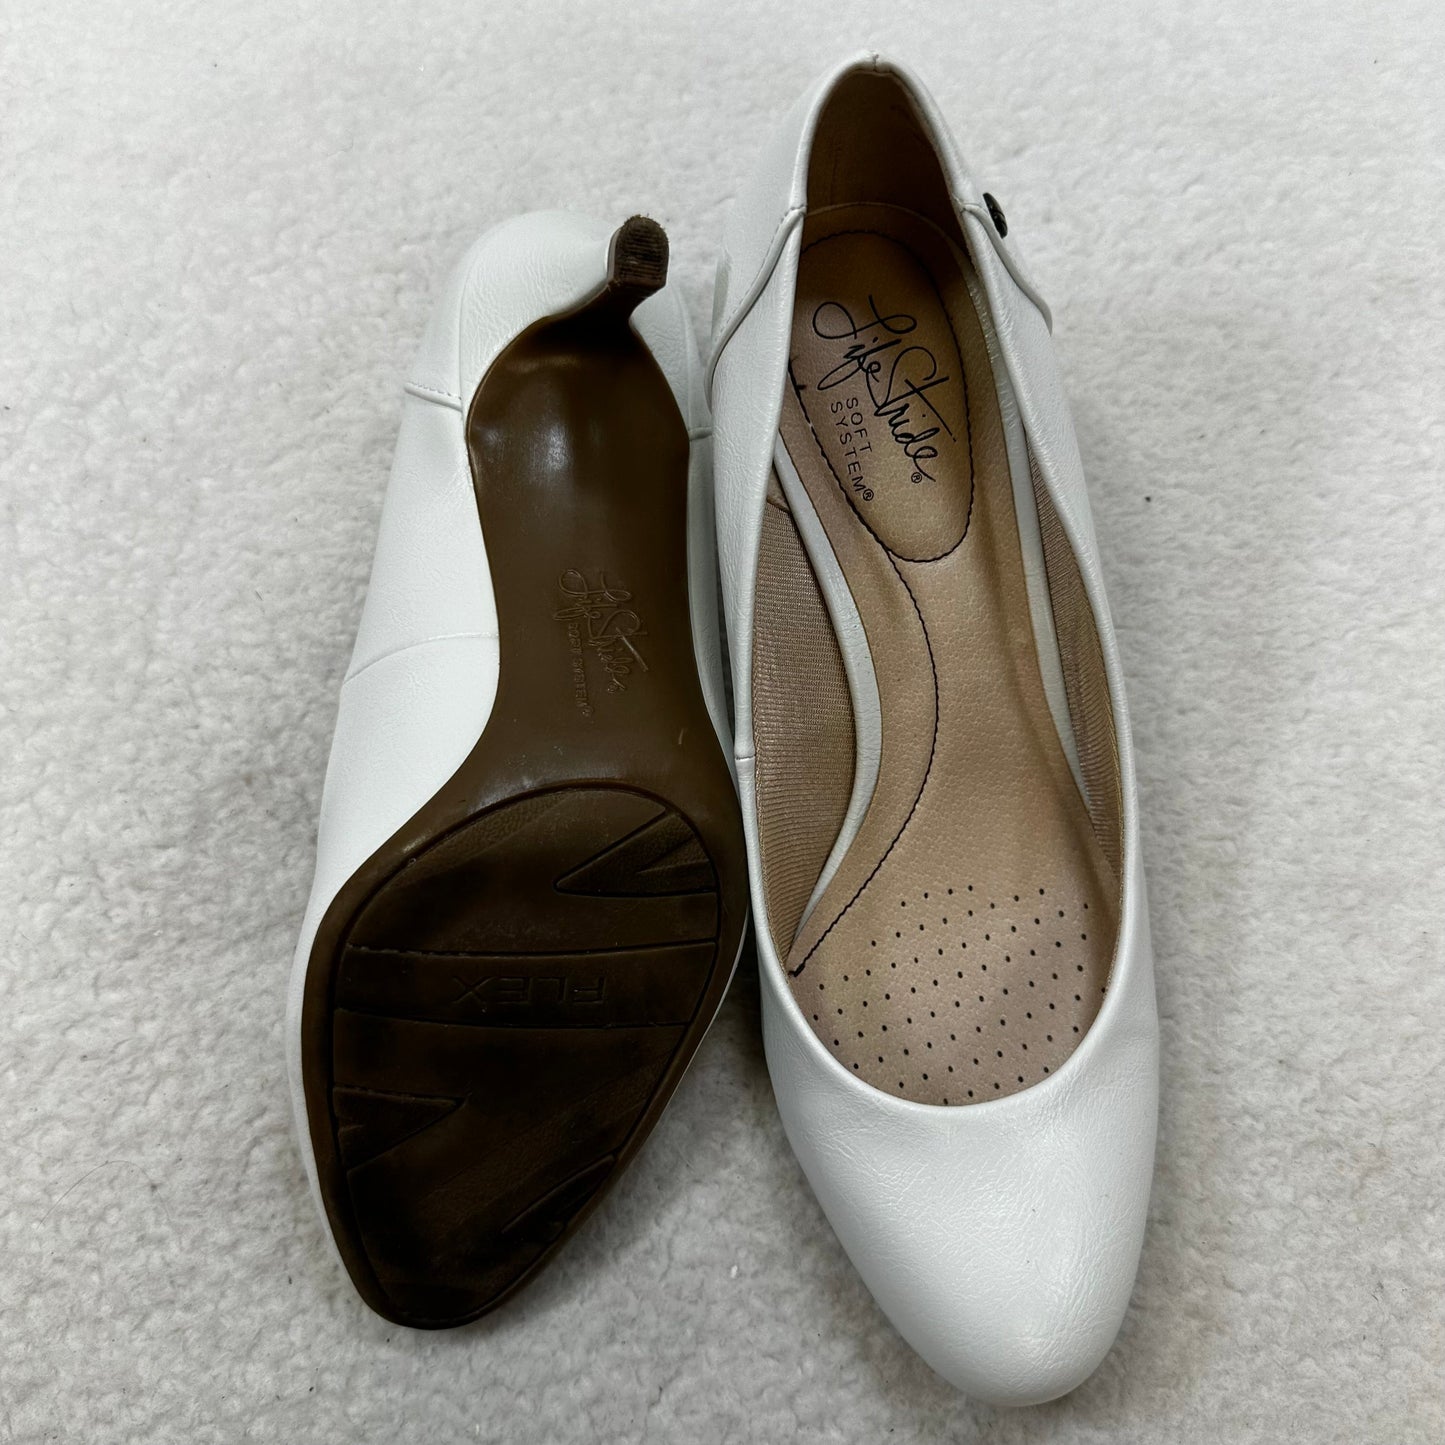 White Shoes Heels Stiletto Life Stride, Size 7.5